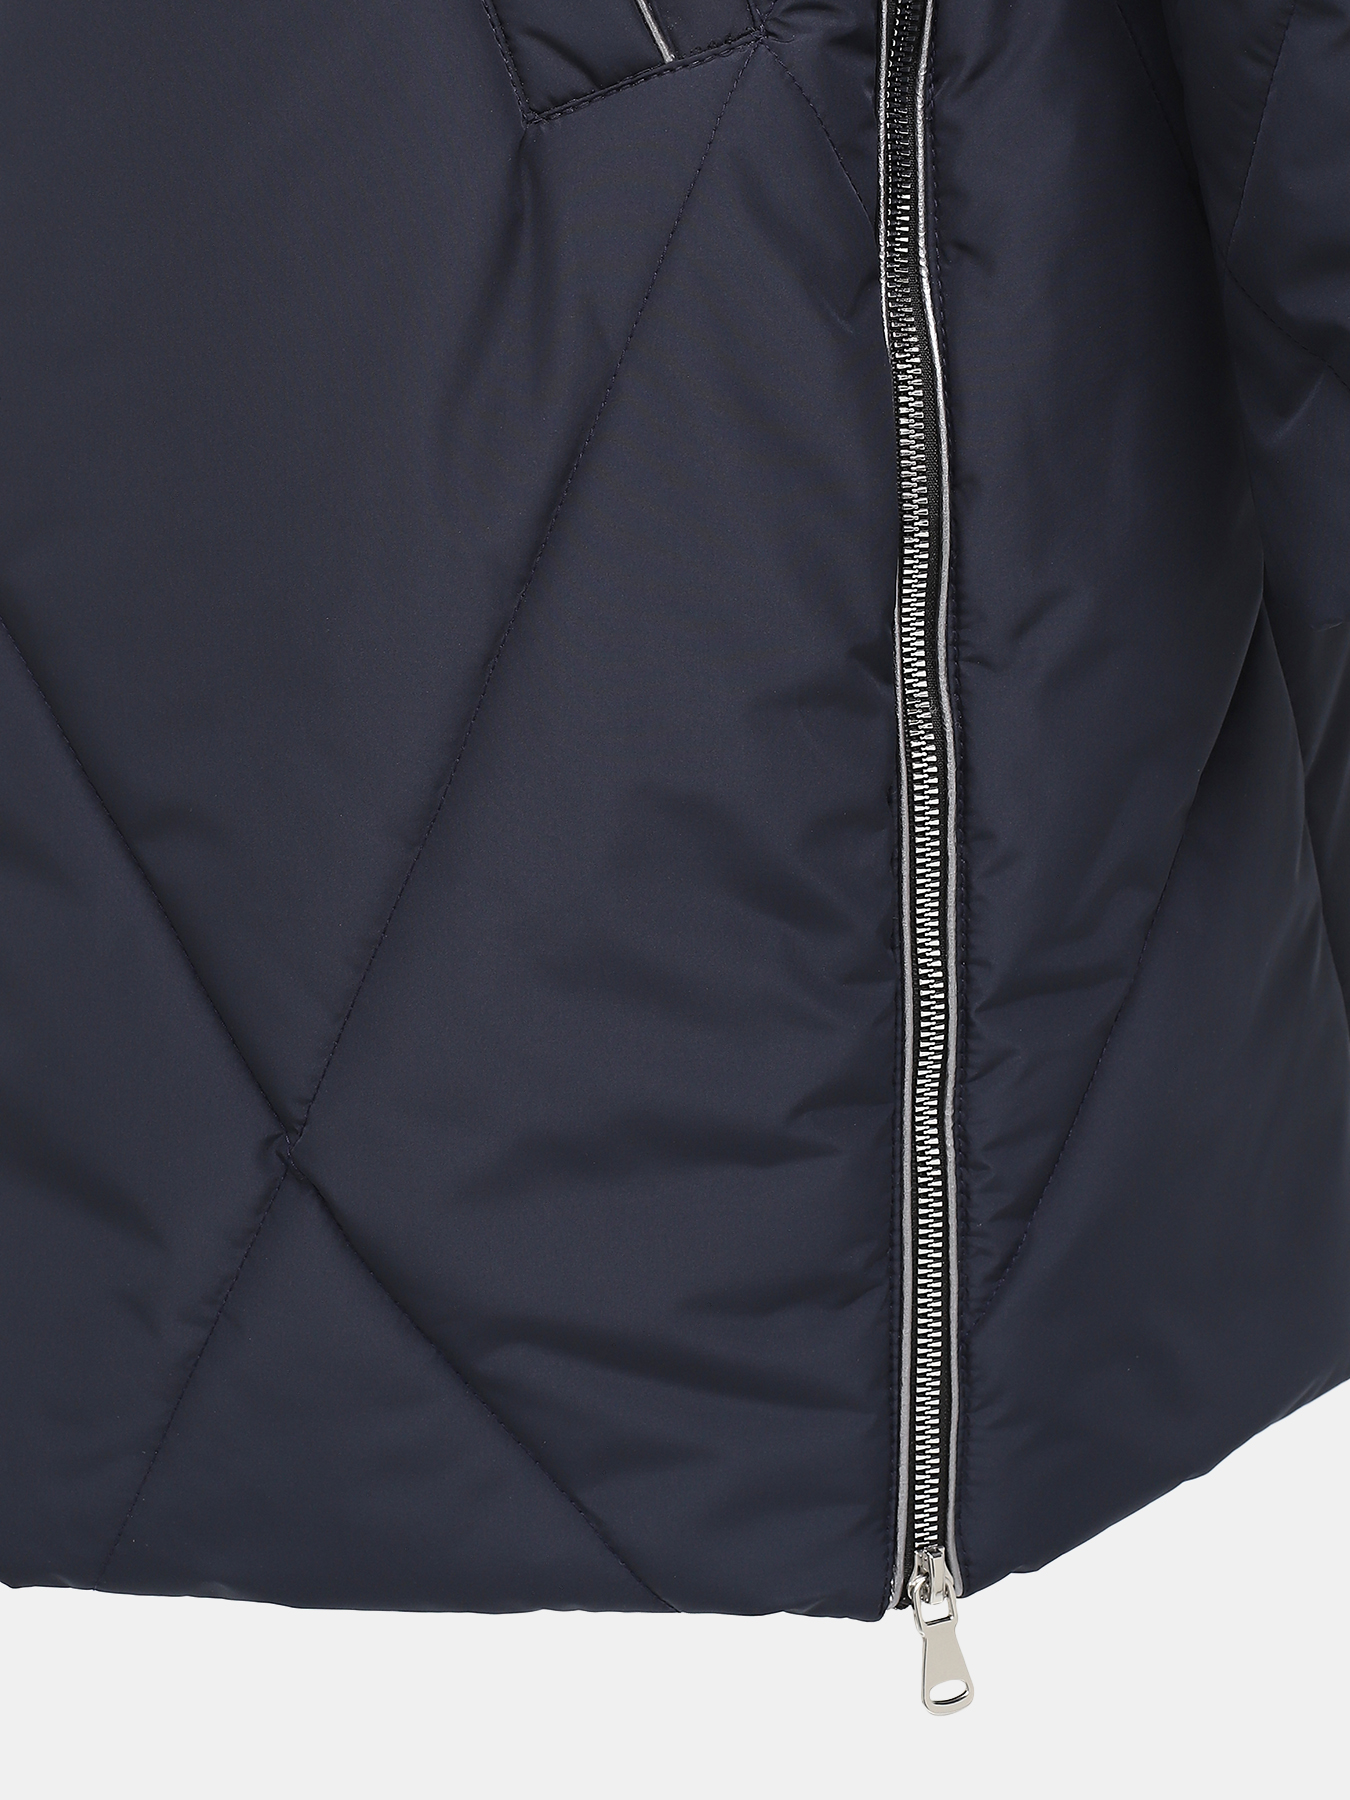 Пальто зимнее Maritta 433620-021, цвет темно-синий, размер 46 - фото 6